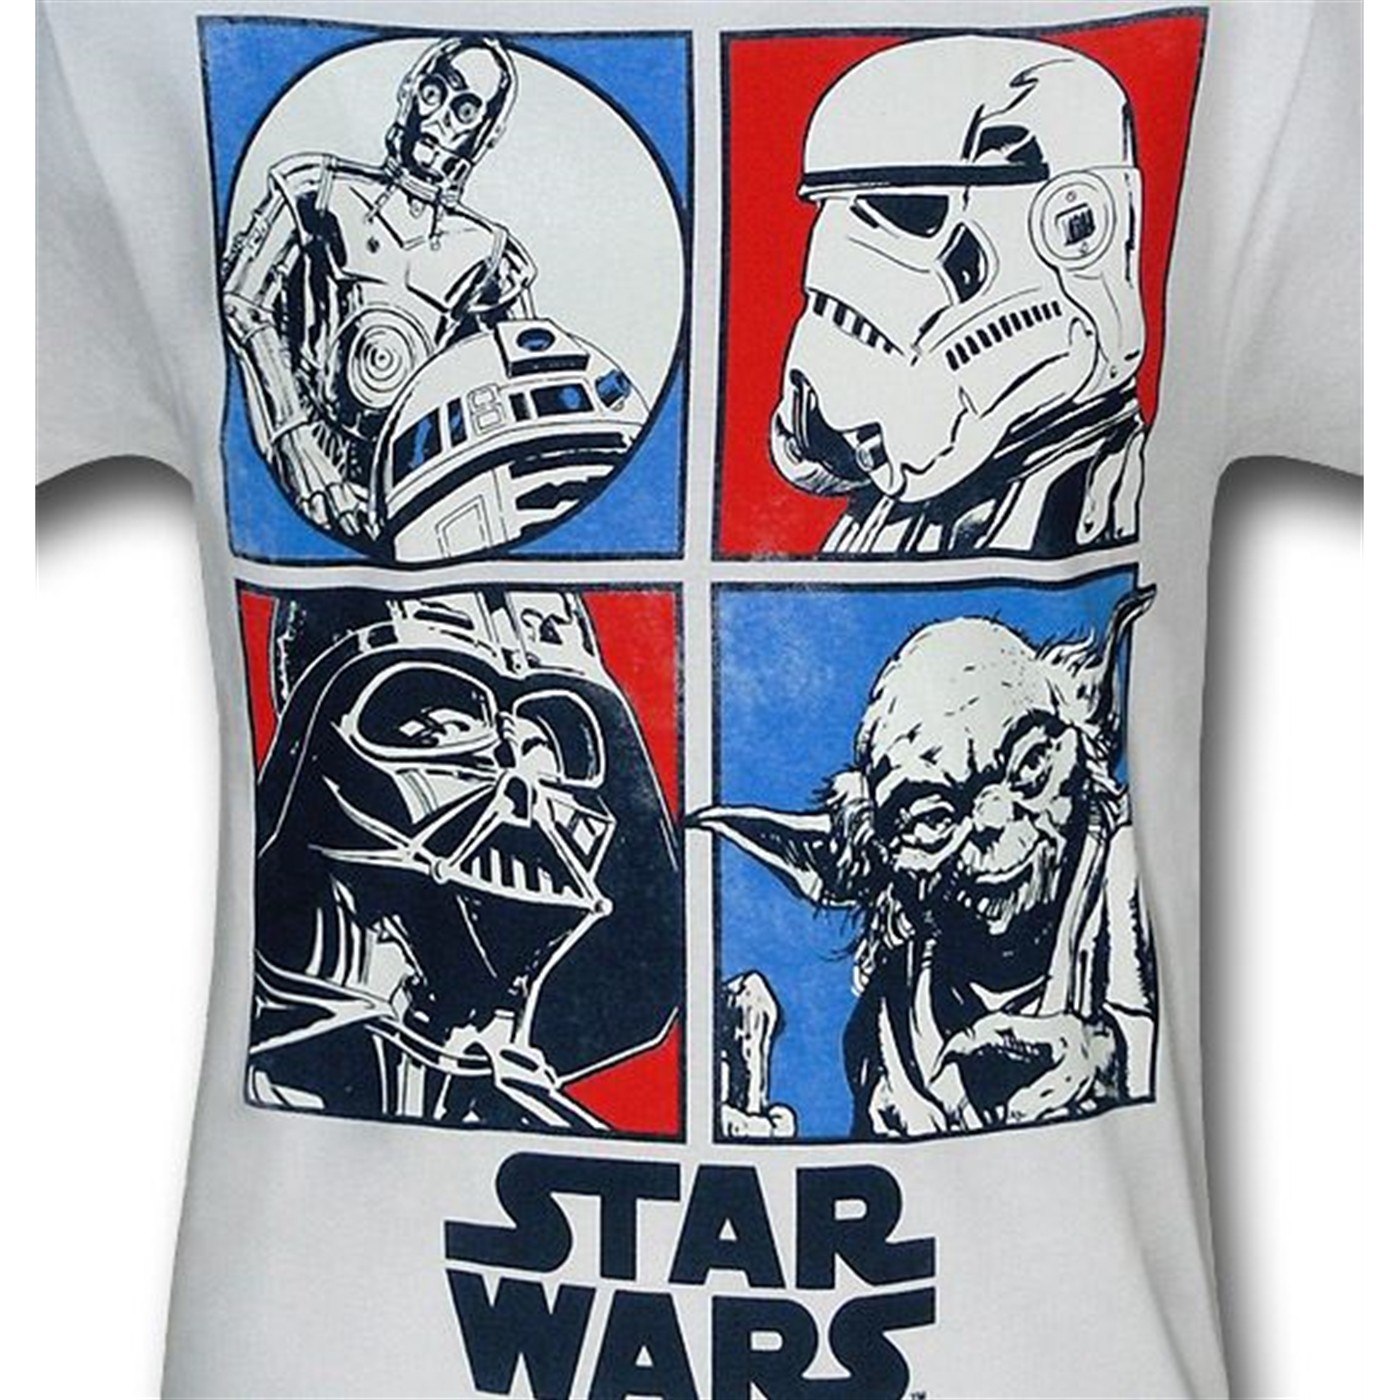 Star Wars Boxes UV-Ink Kids T-Shirt